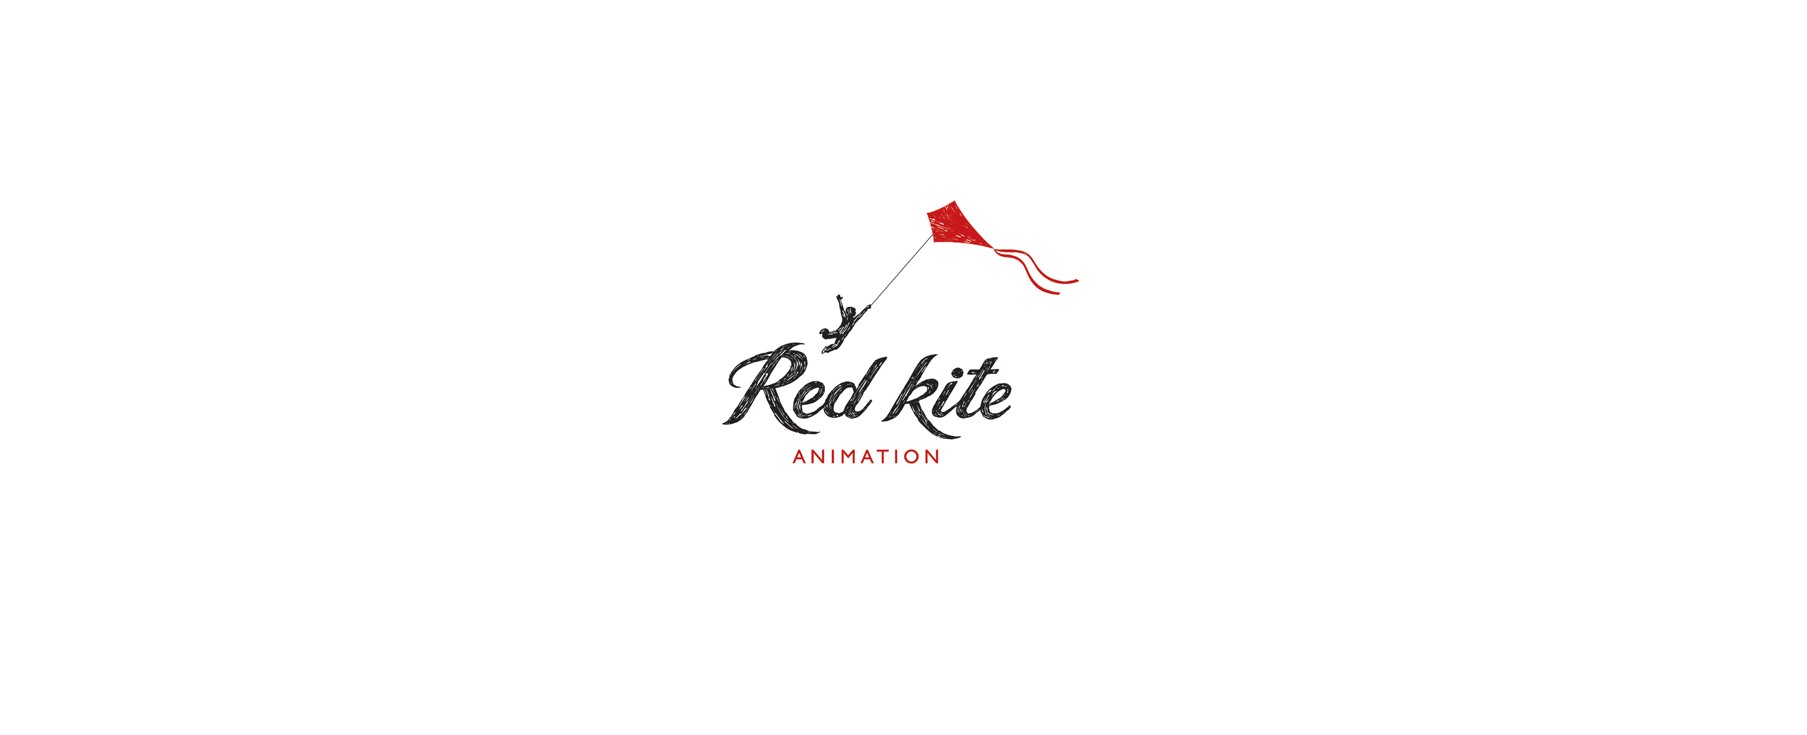 Kite animation